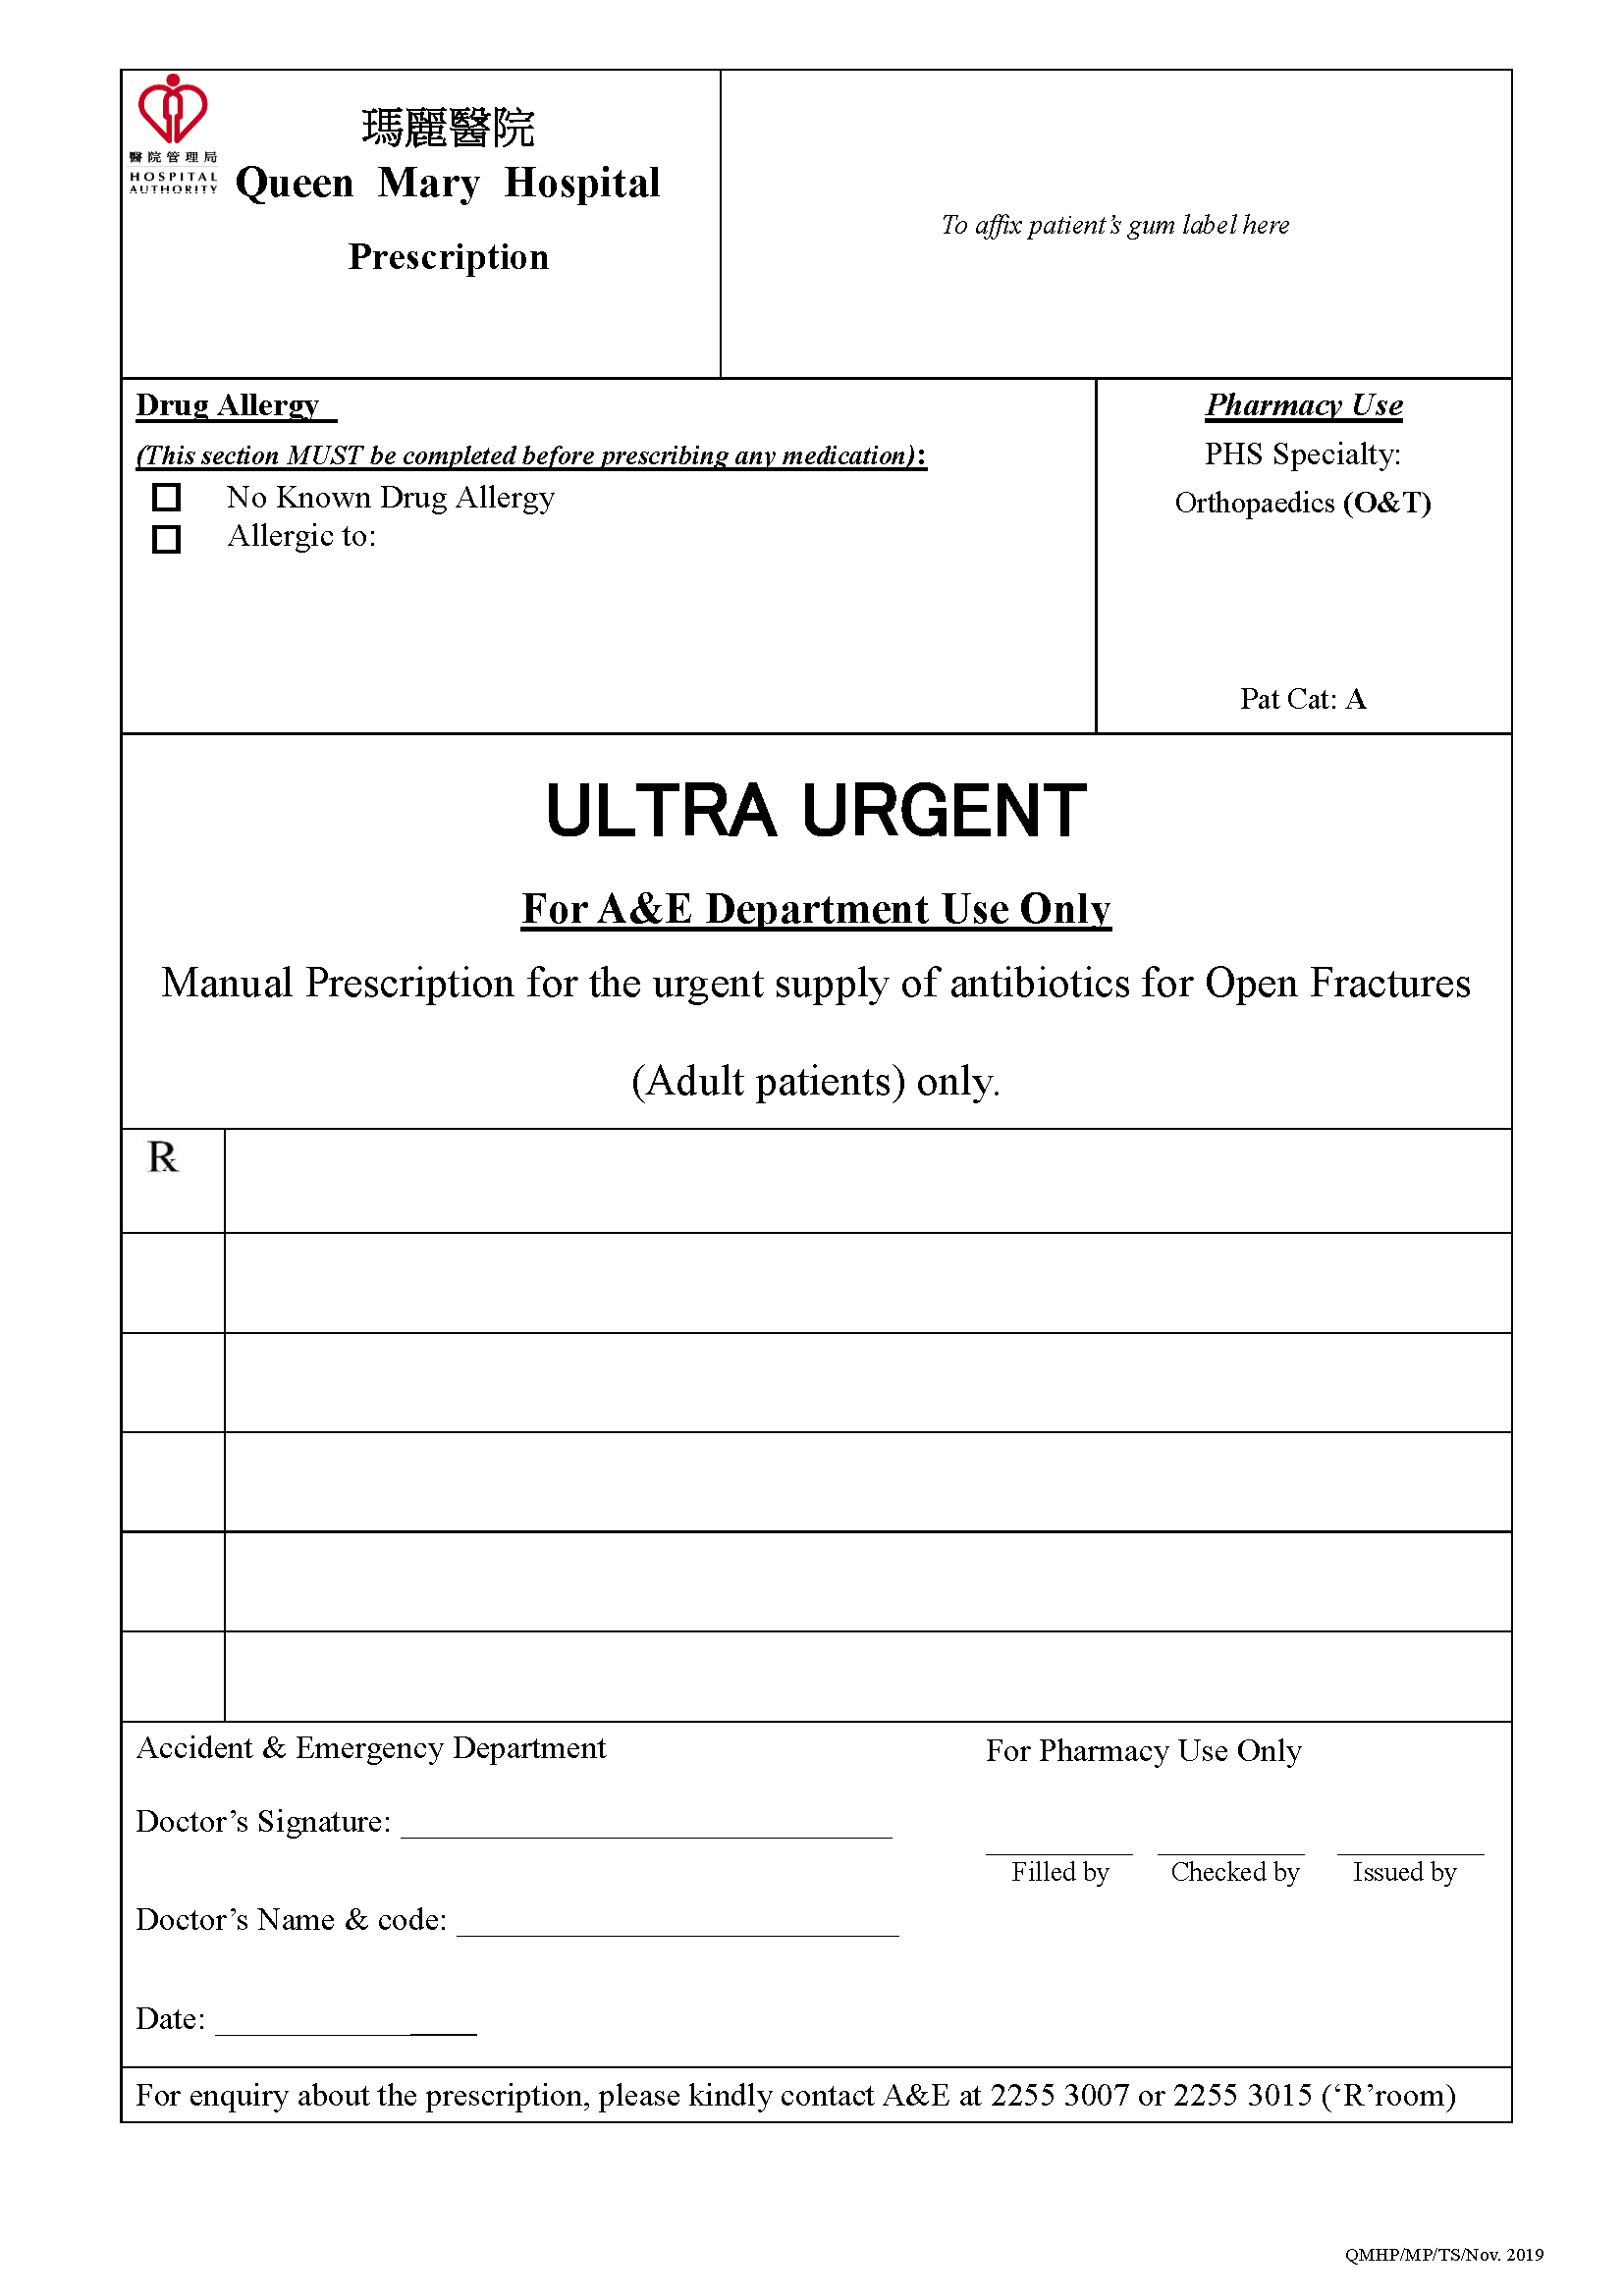 Manual Prescription for Open Fracture 2019